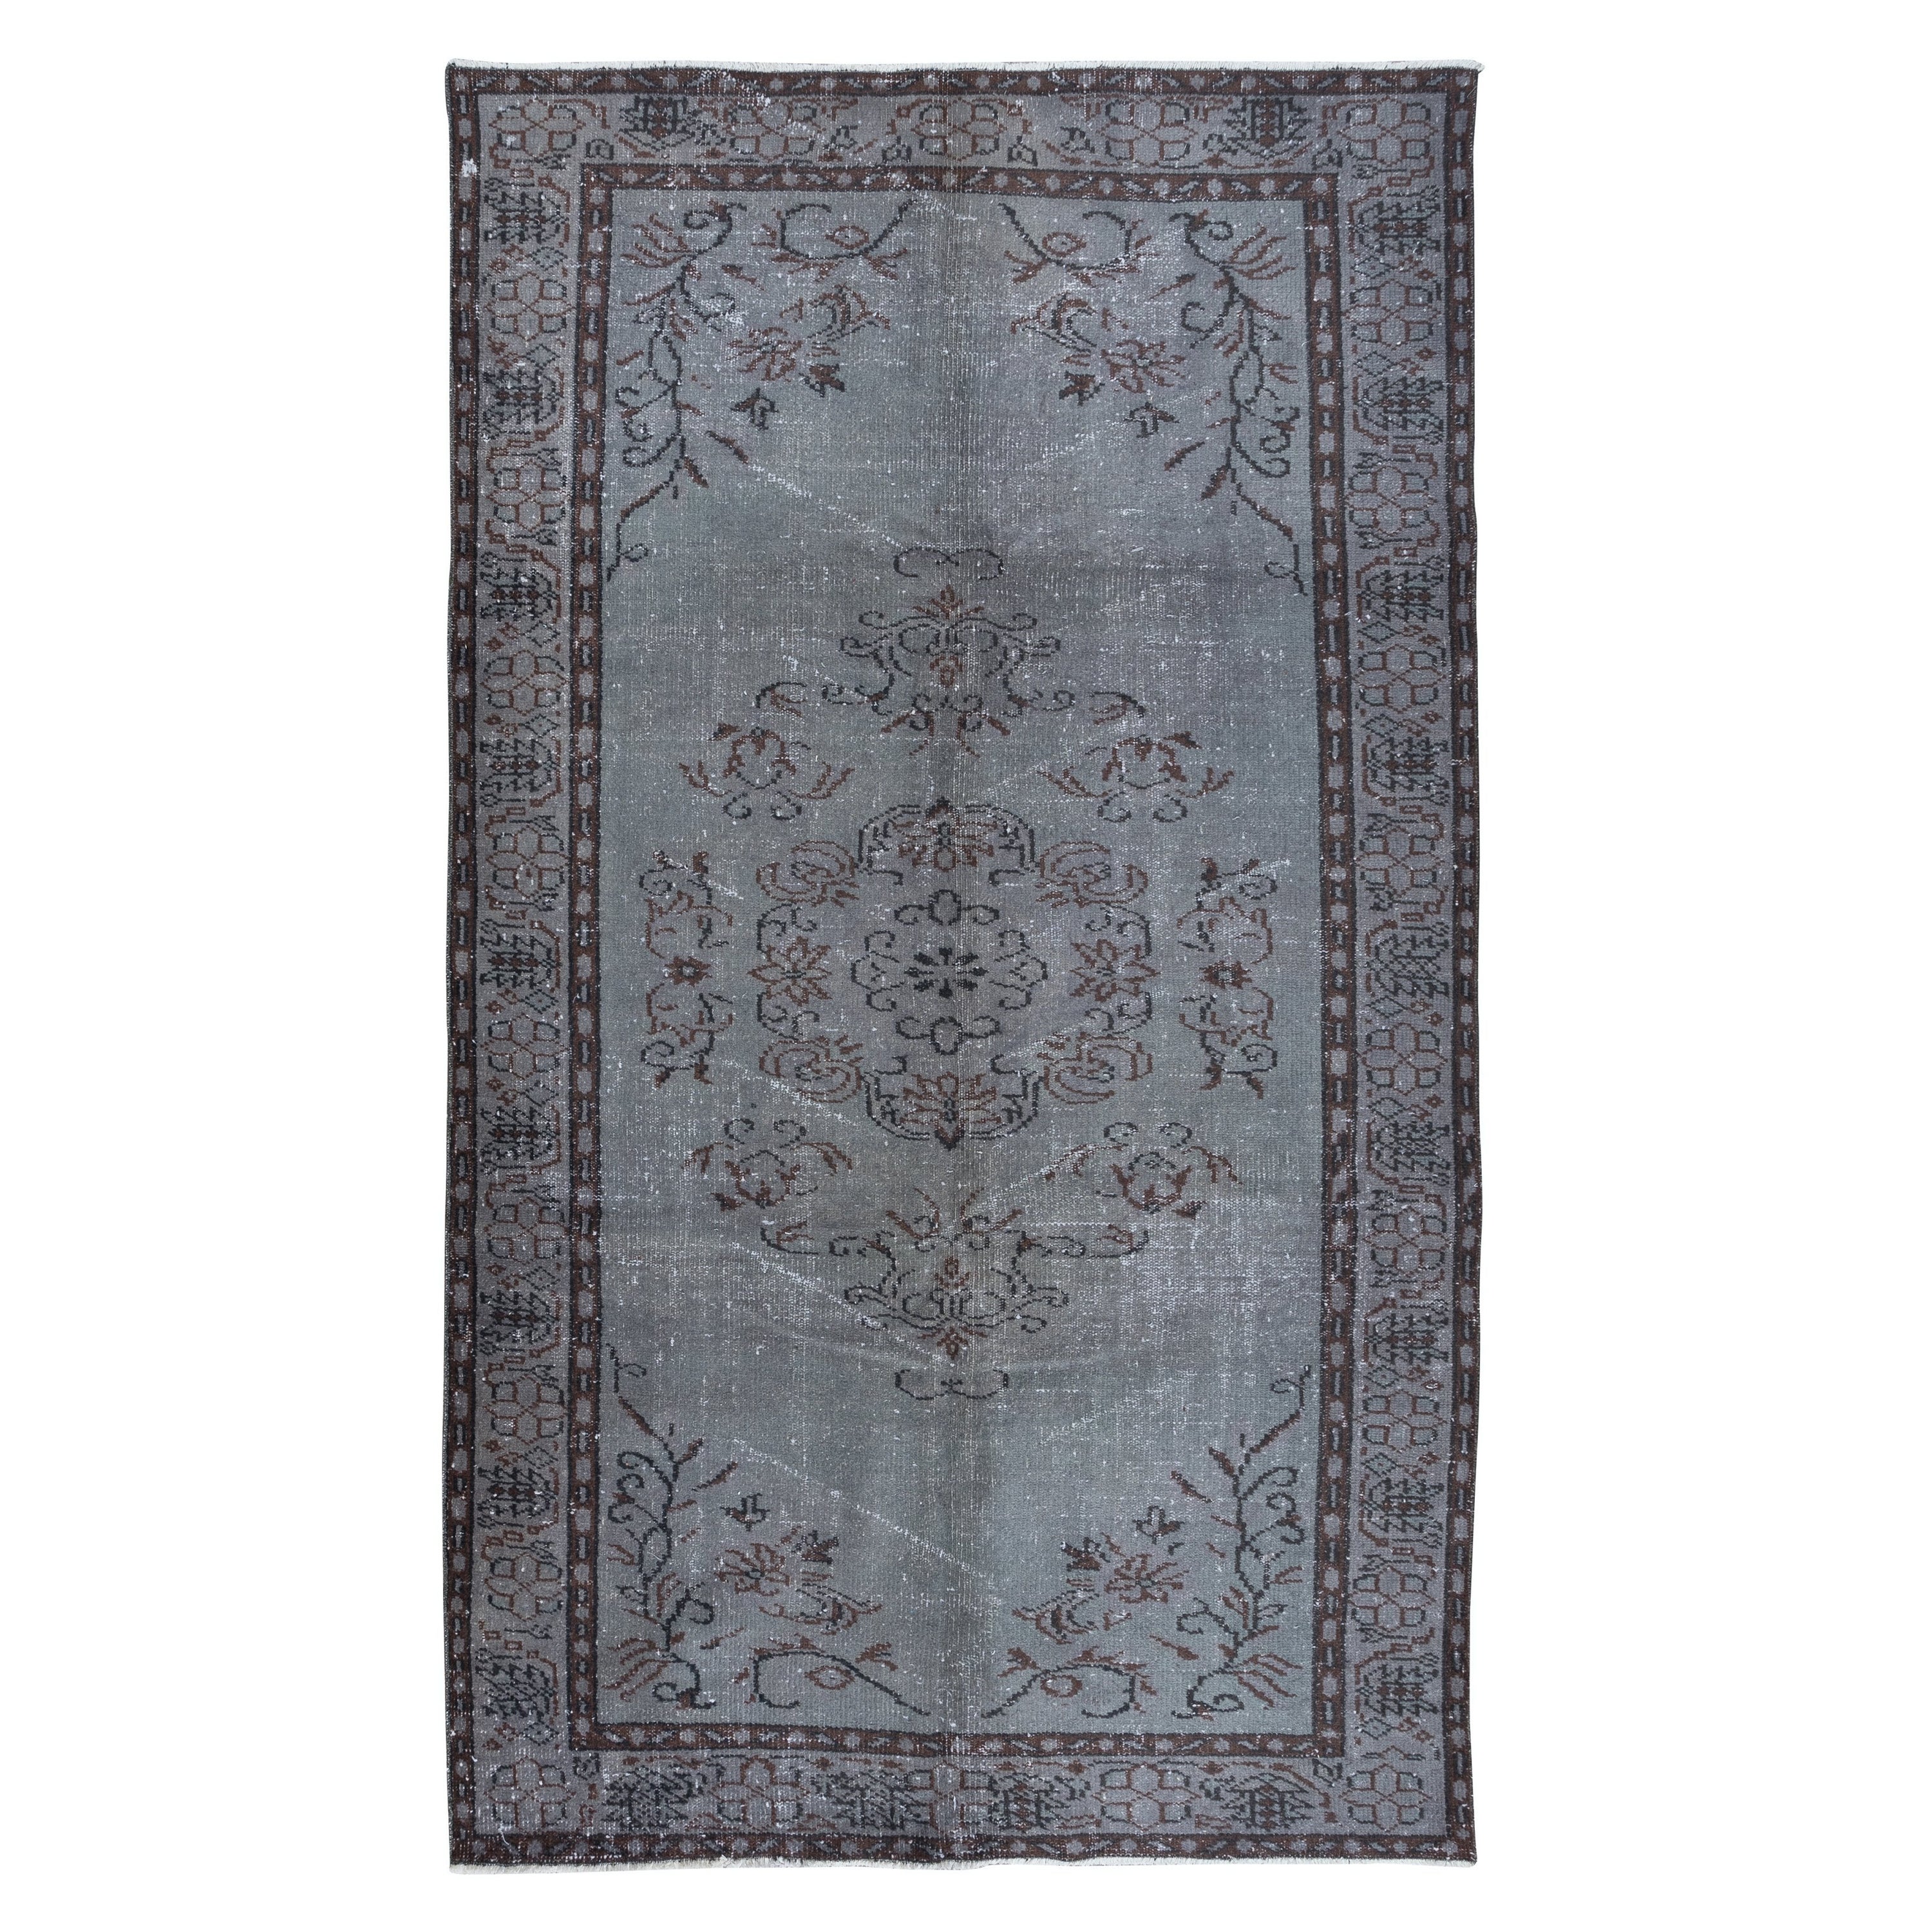 5.6x9.4 Ft Modern Gray Handmade Area Rug, Turkish Carpet with Medallion Design